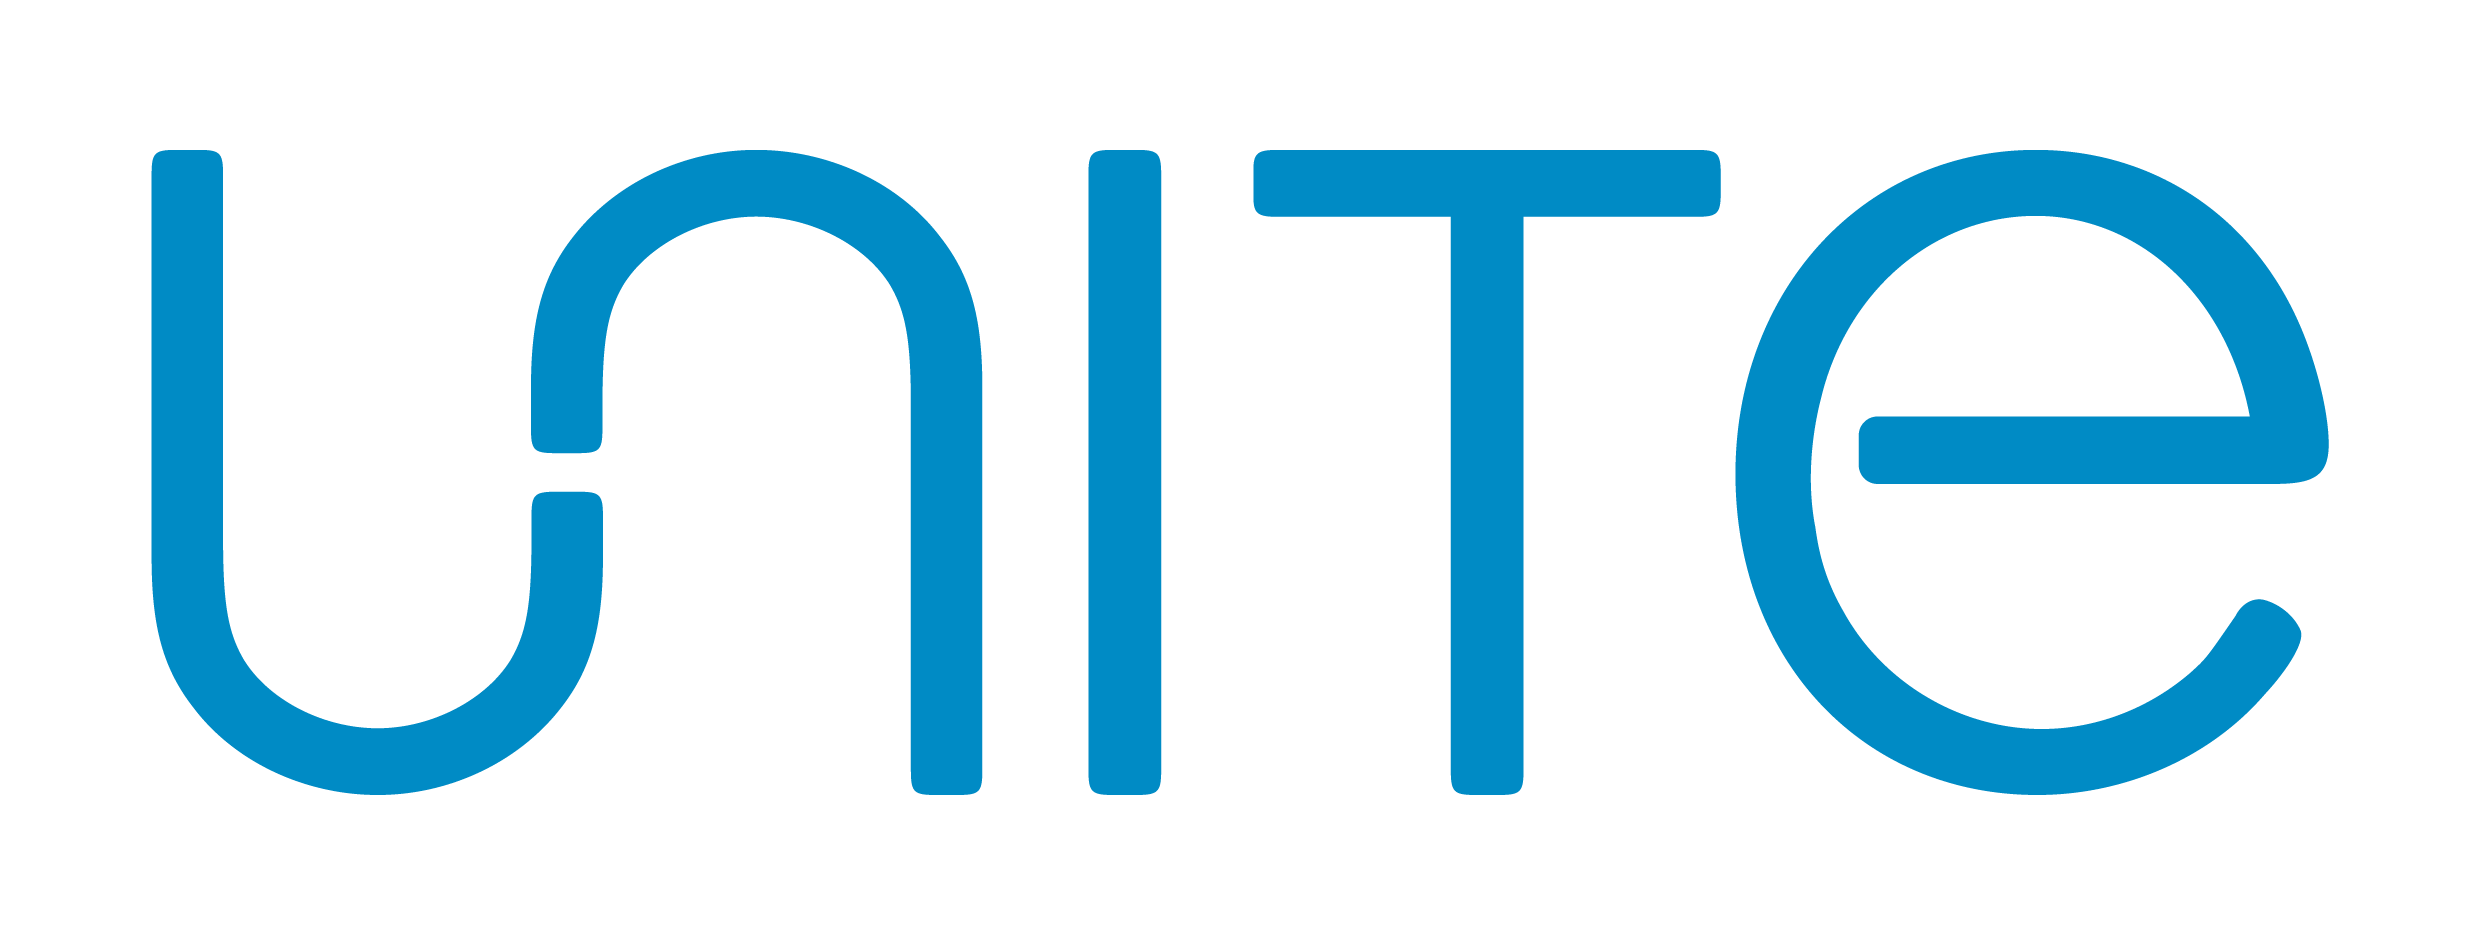 UNITE: An eSIM and Digital Experience Platform